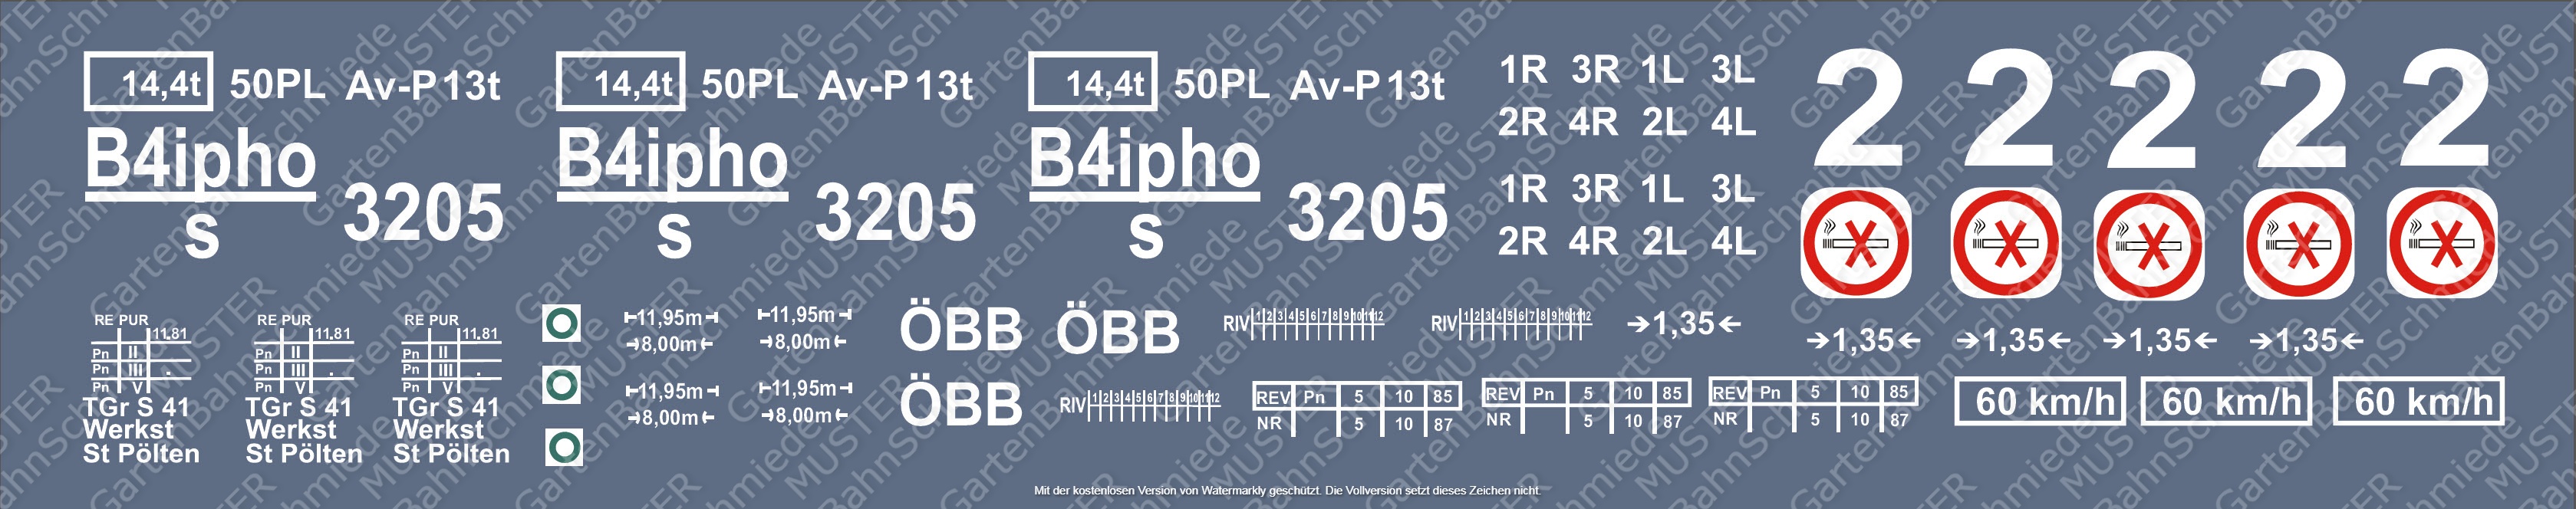 DC-B4ipho 3205